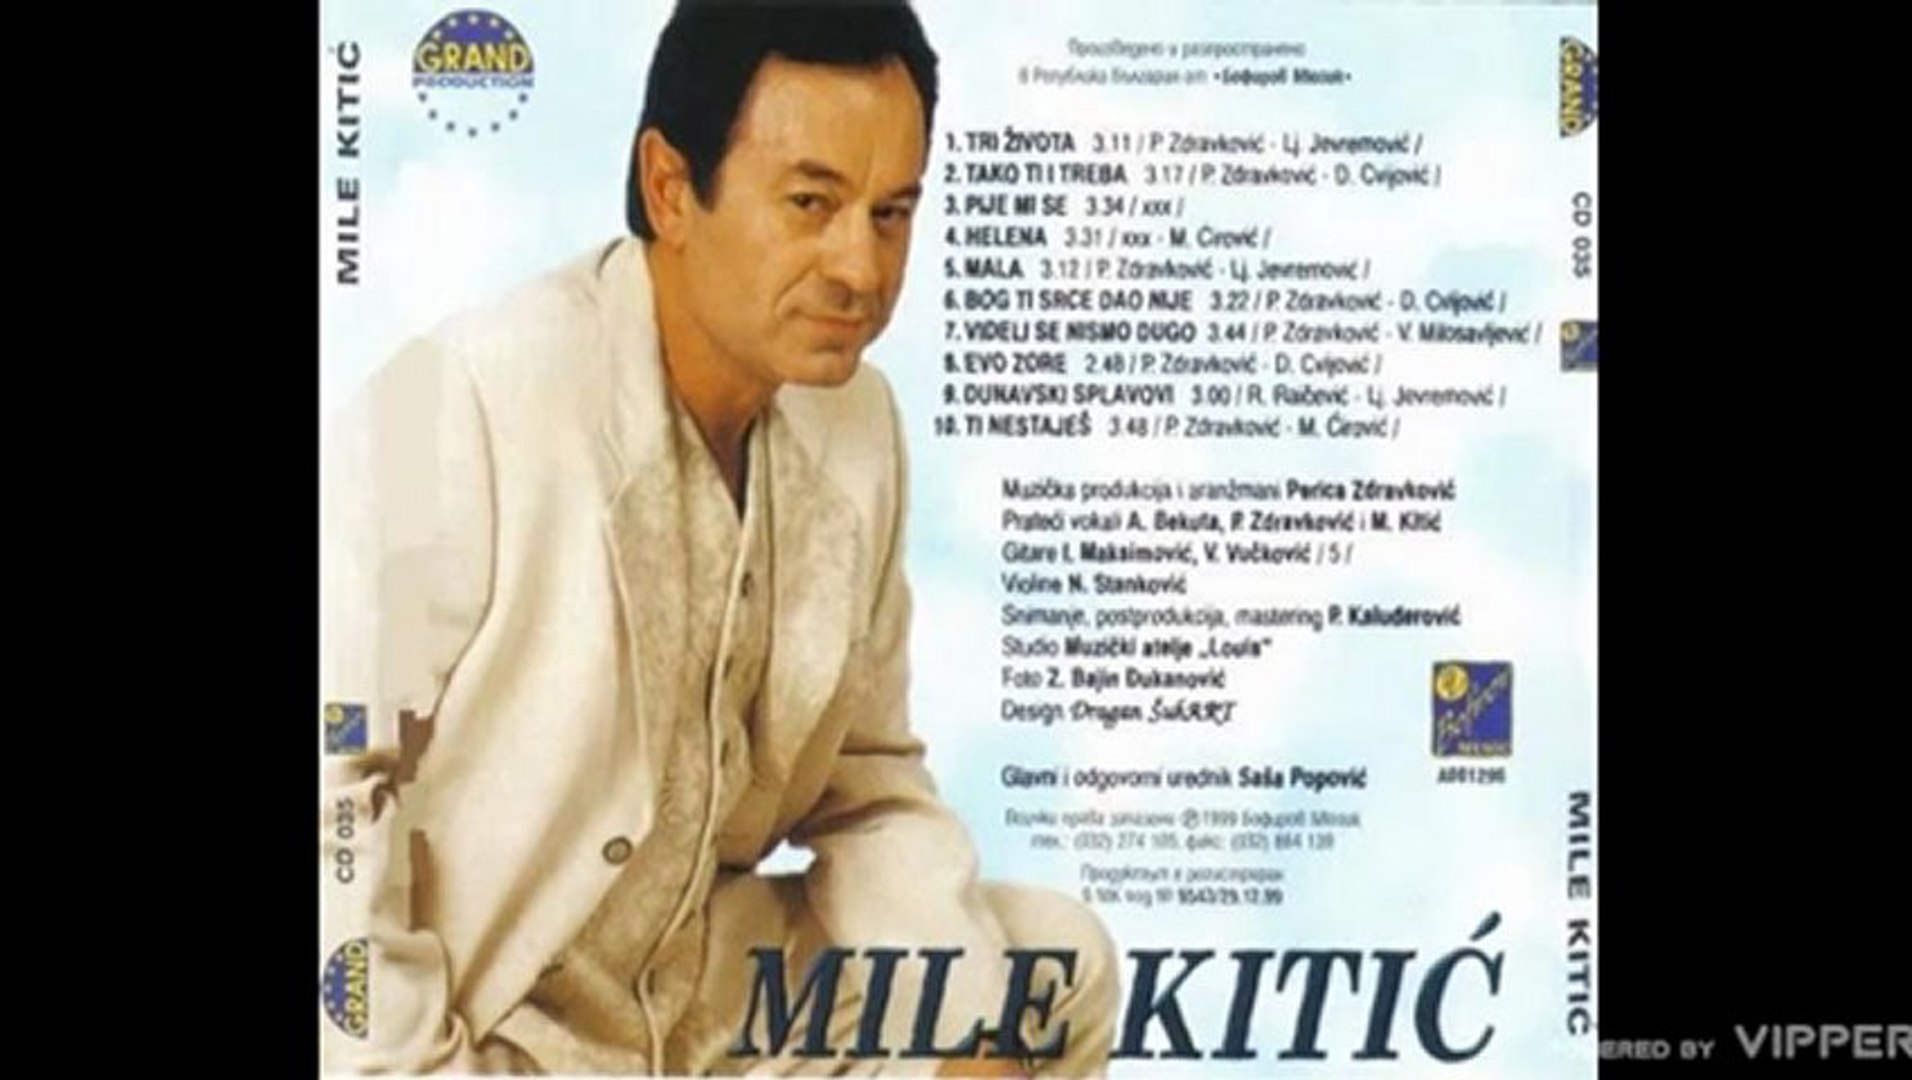 Mile Kitic - Dunavski splavovi - (Audio 1999) - video Dailymotion